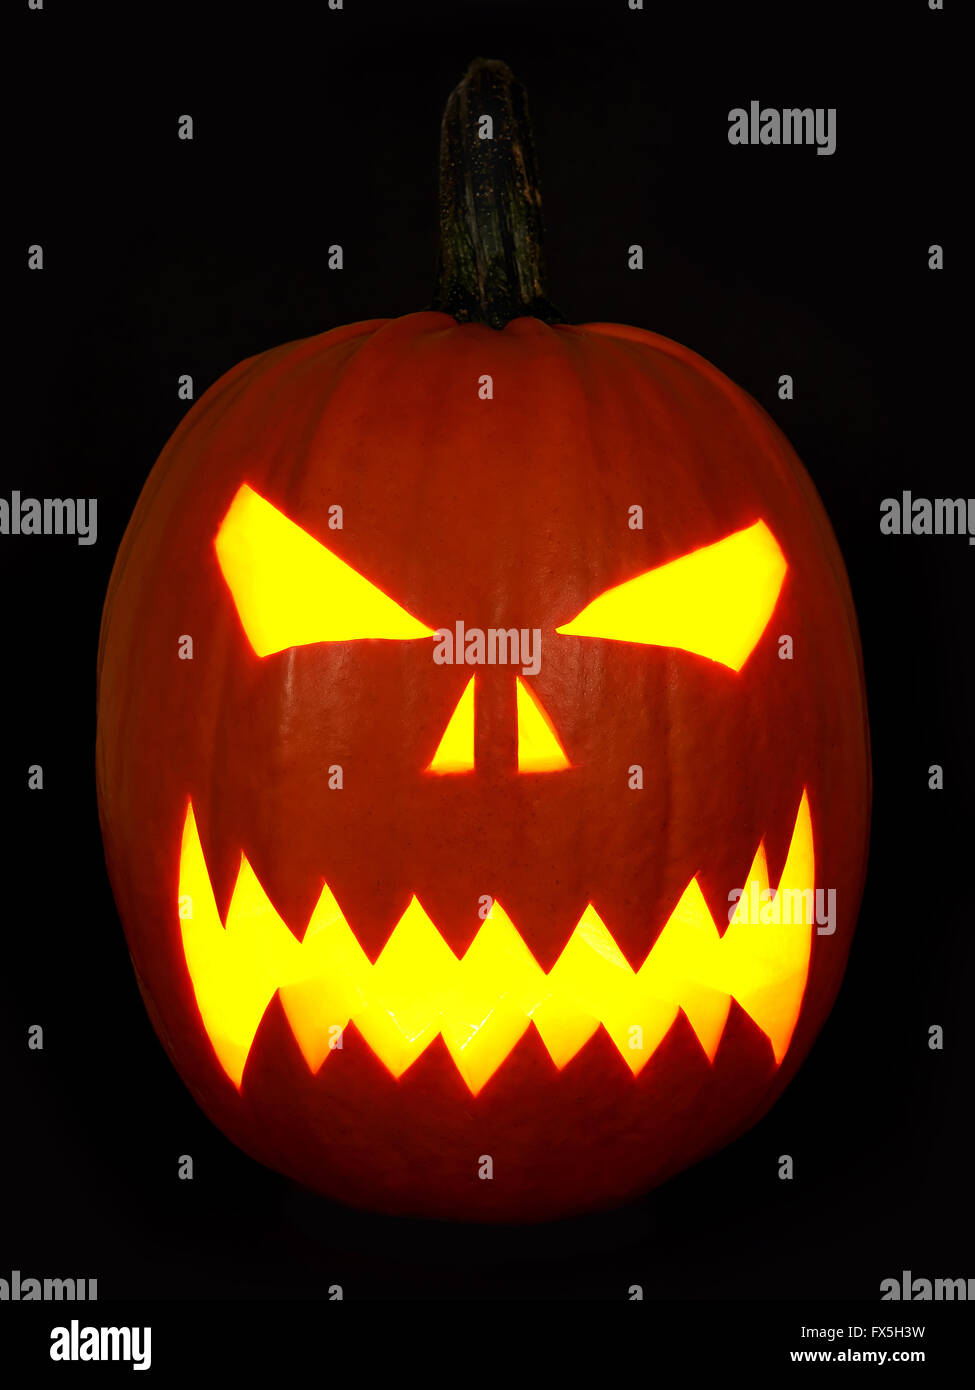 Scary Halloween maschera fatta di una zucca arancione Foto Stock